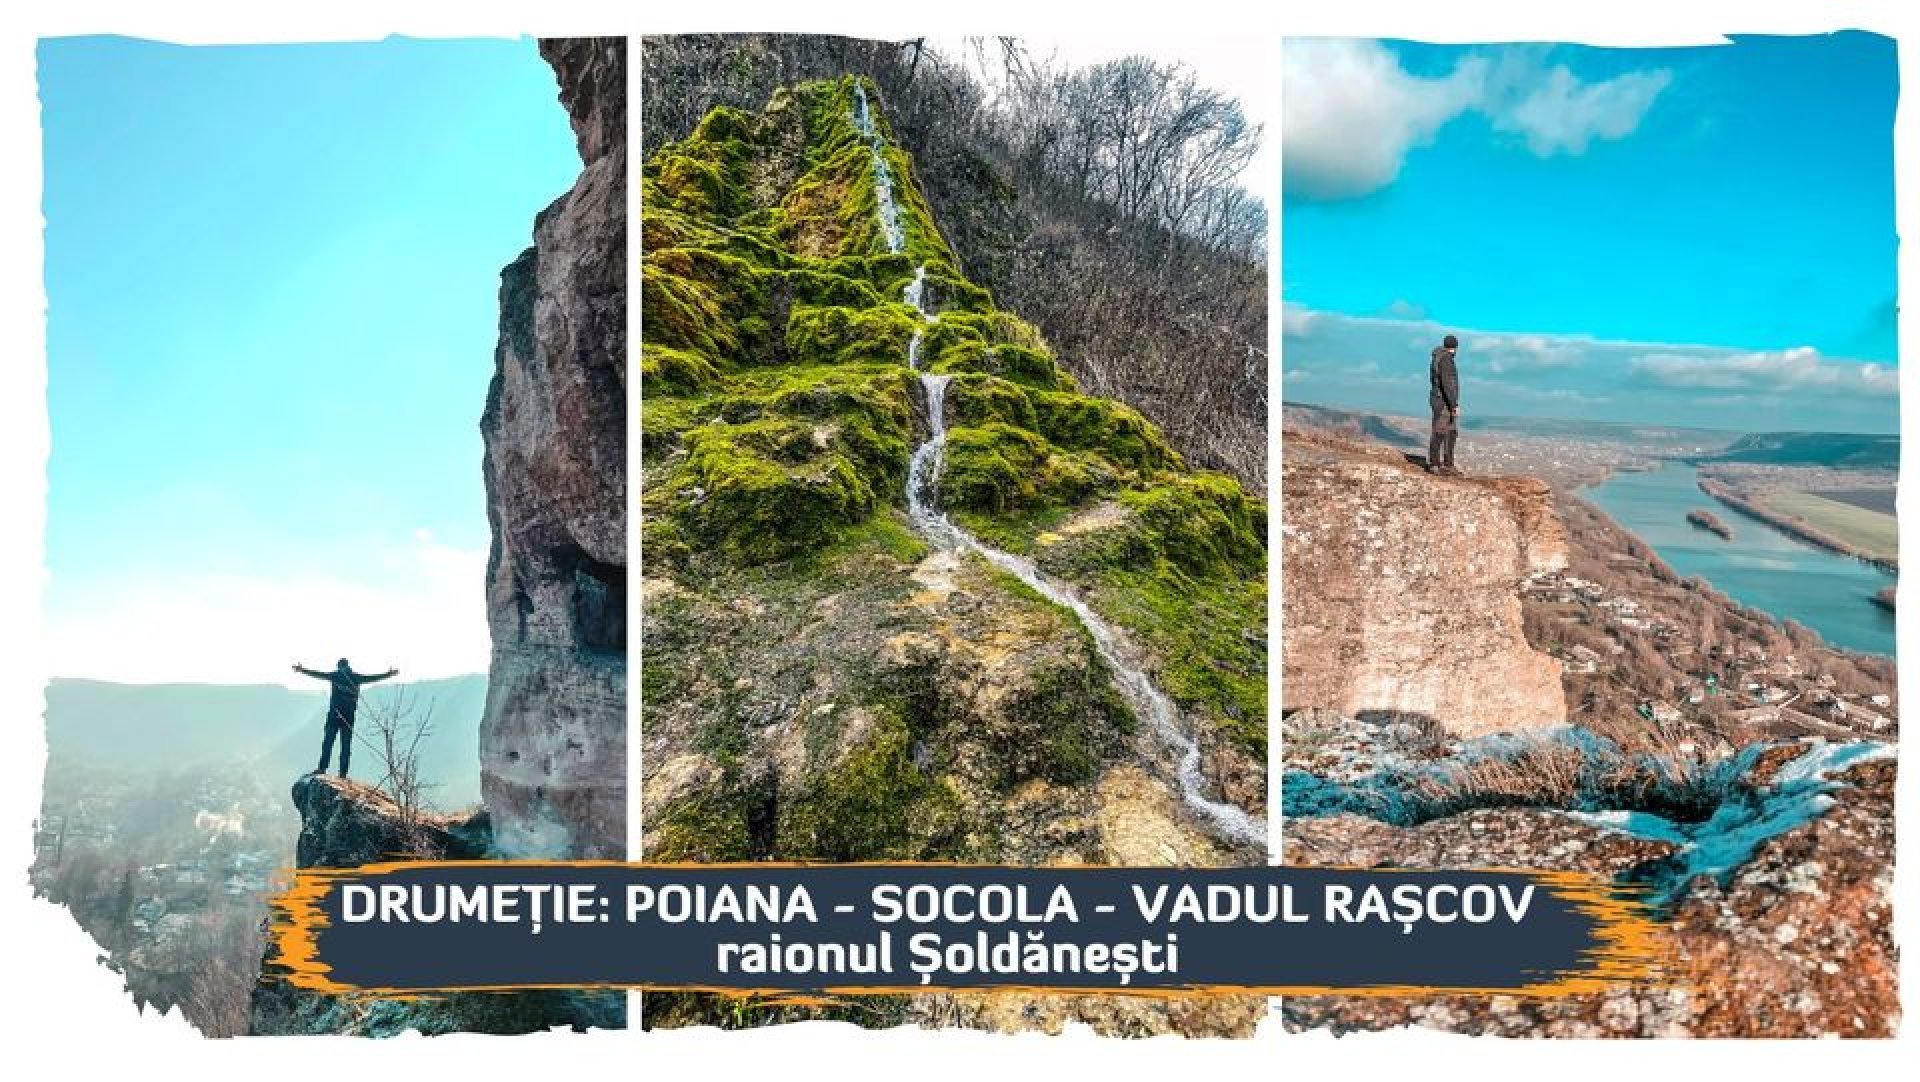 Drumeție: Poiana - Socola - Vadul Rașcov